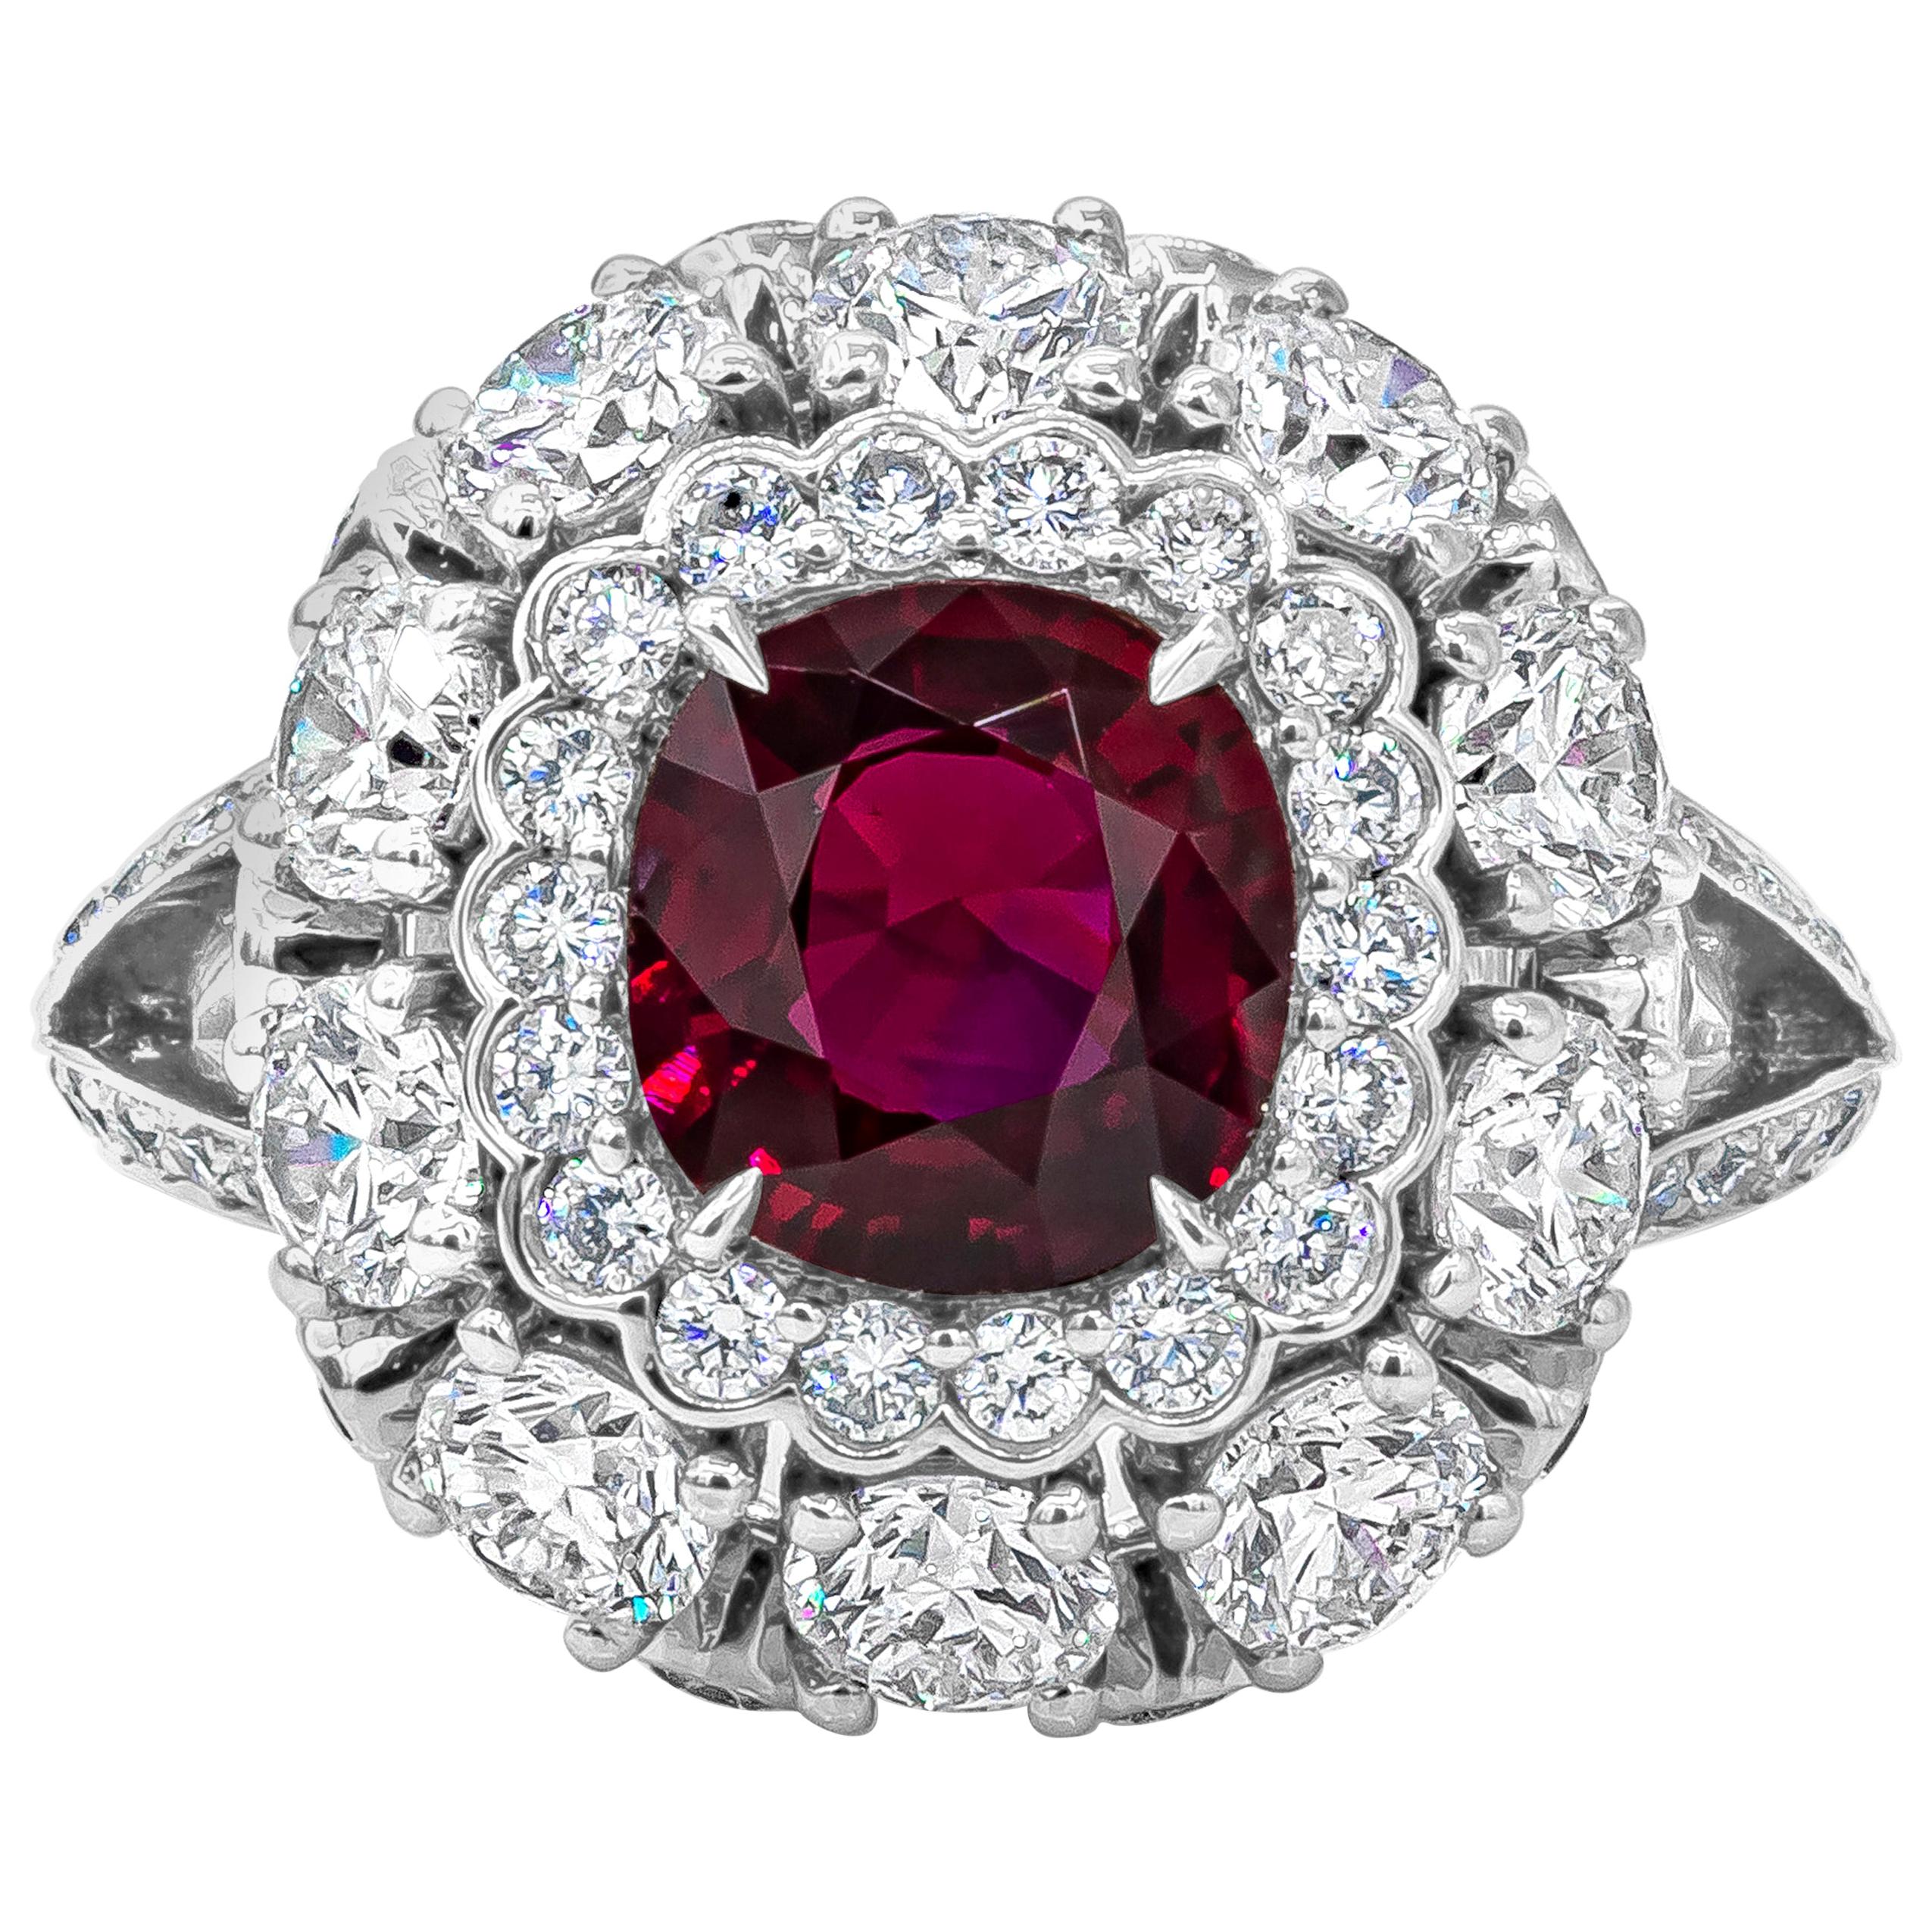 Roman Malakov 1.69 Carats No-Heat Burmese Ruby with Diamond Halo Engagement Ring